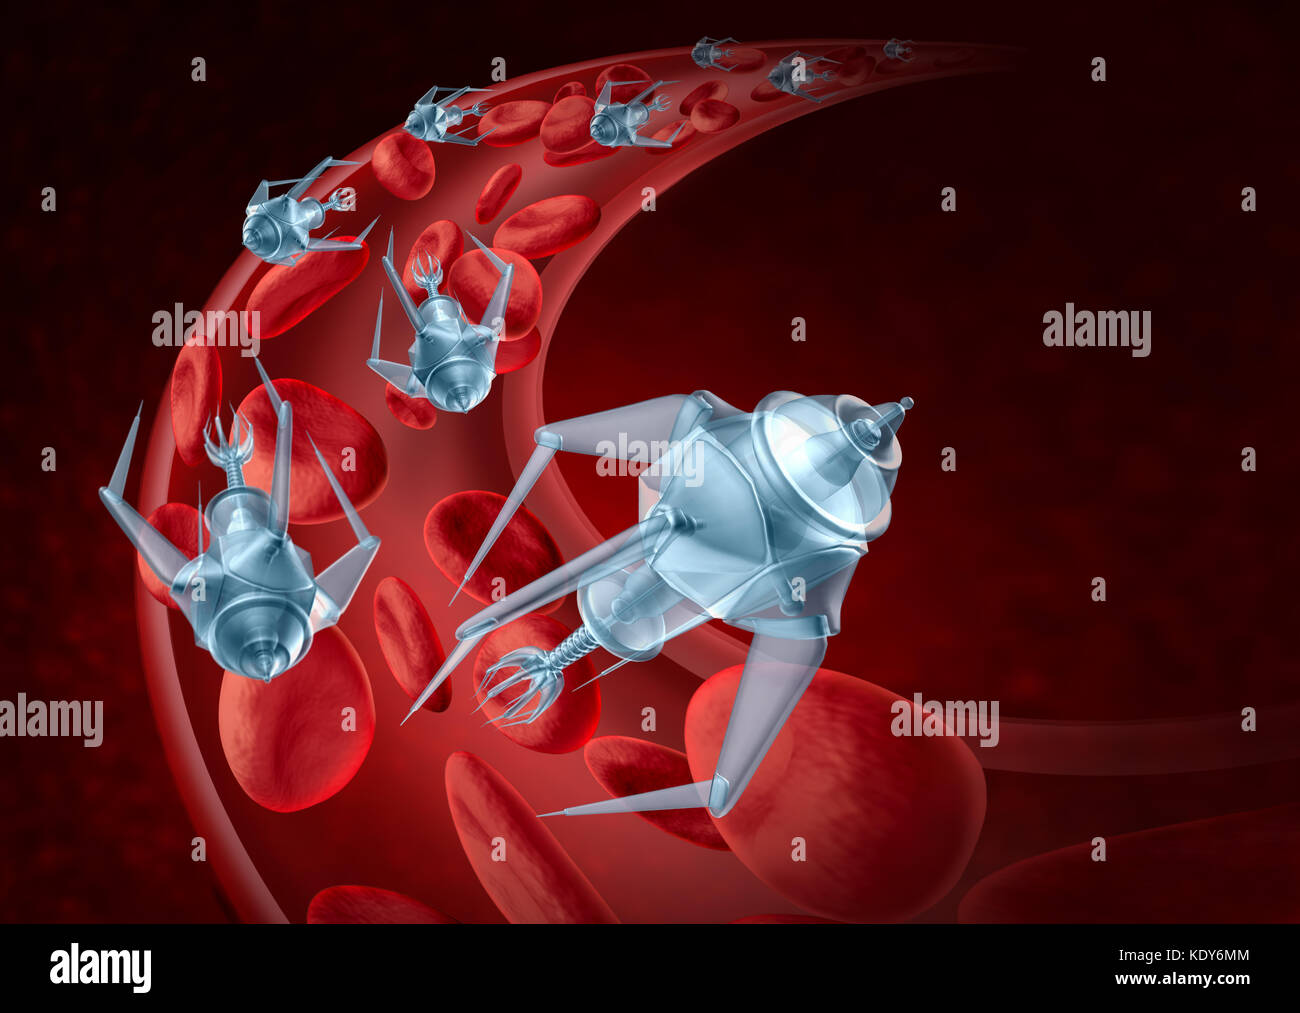 Nanorobots e nanotecnologia e bioingegneria advanced medical technology concetto come robot nanomedicine all'interno di una arteria umana. Foto Stock